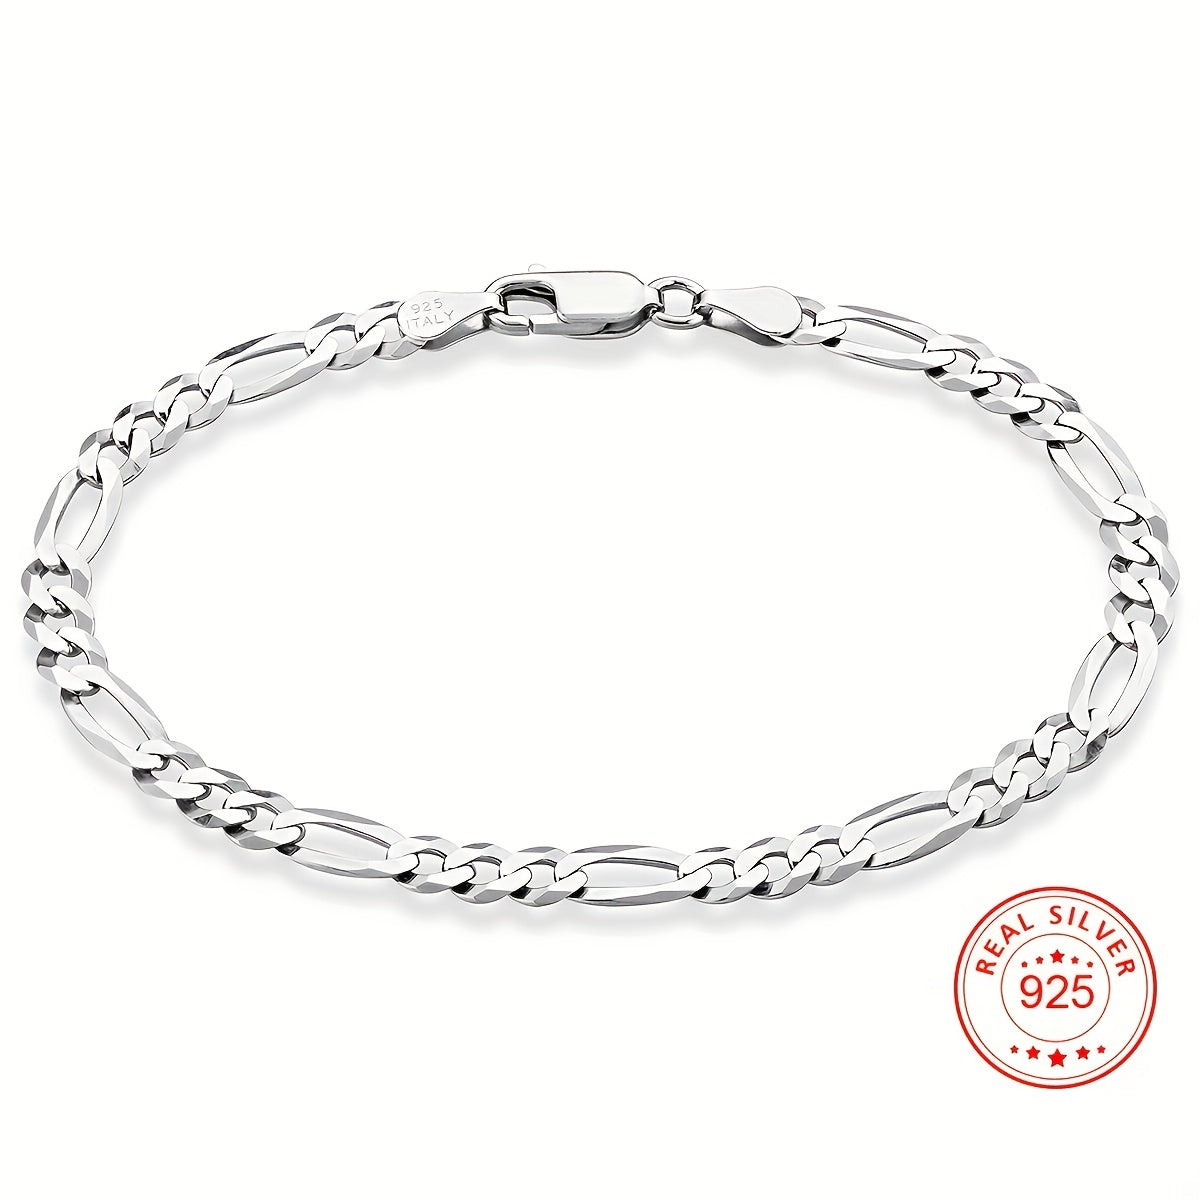 925 Sterling Silver Figaro Chain Bracelet, Unisex